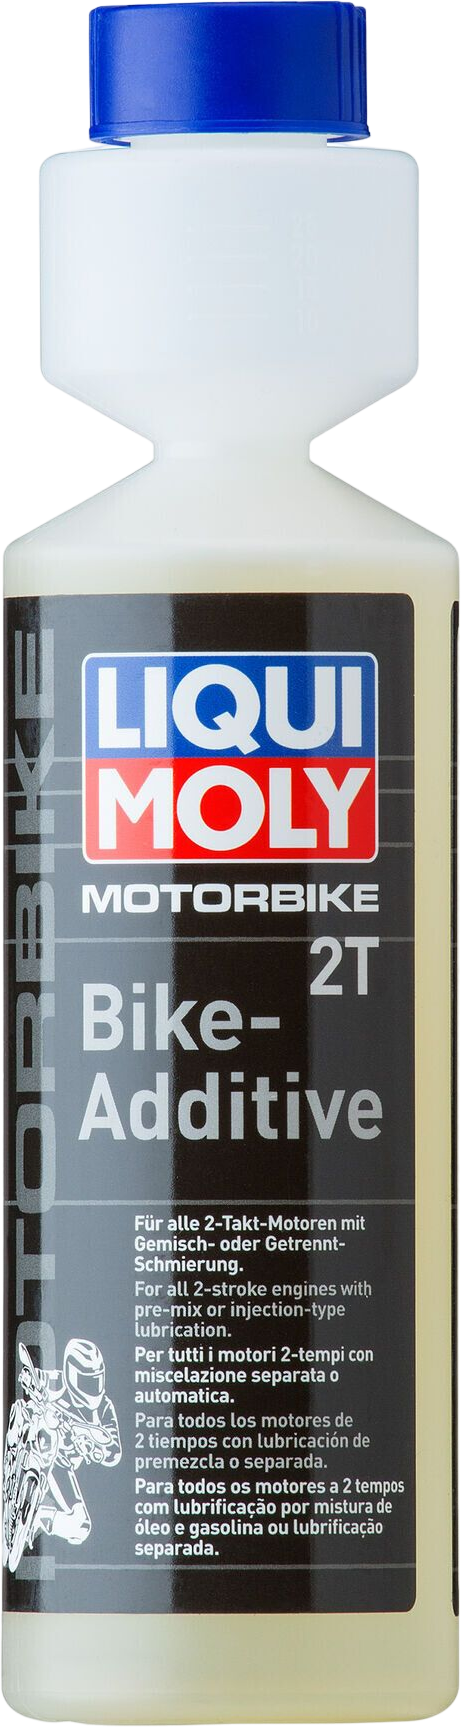 Liqui Moly Motorbike 2T-Additief, 6 x 250 ml detail 2